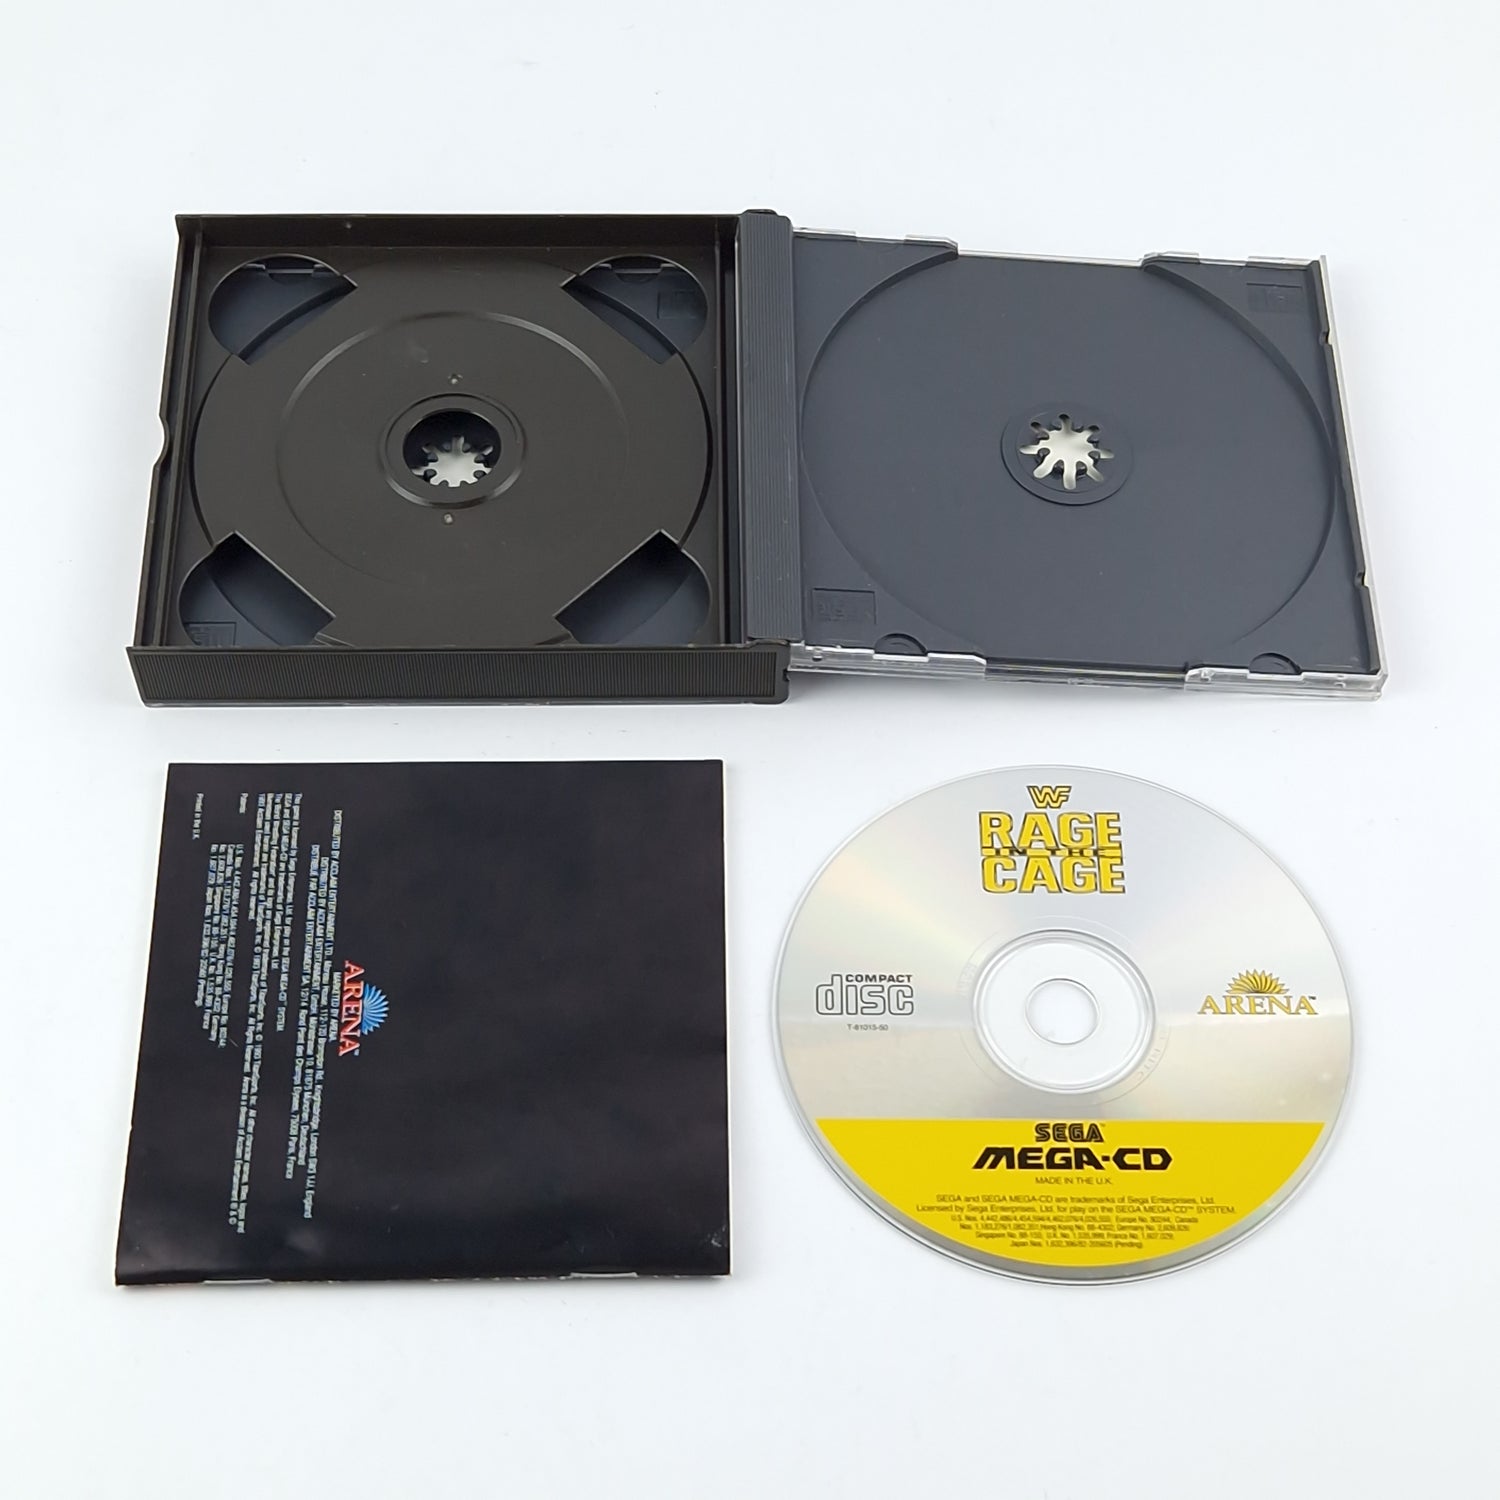 Sega Mega CD Game: WWF Rage in the Cage - CD Instructions OVP / PAL MCD Game